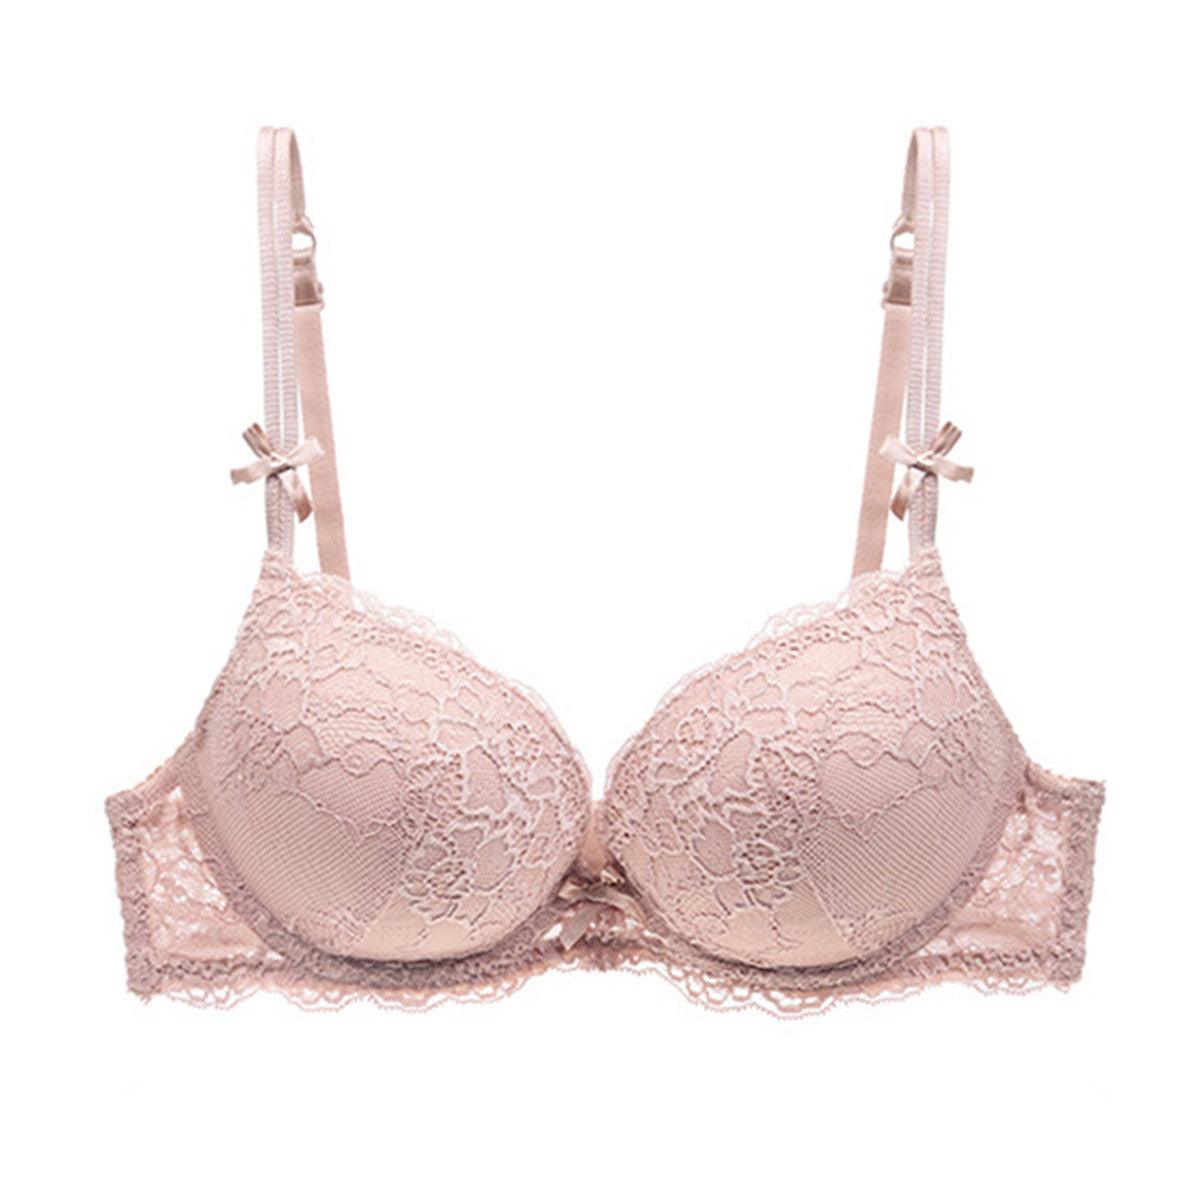 Small Breast Push up Bra - ForVanity bras, women's lingerie 